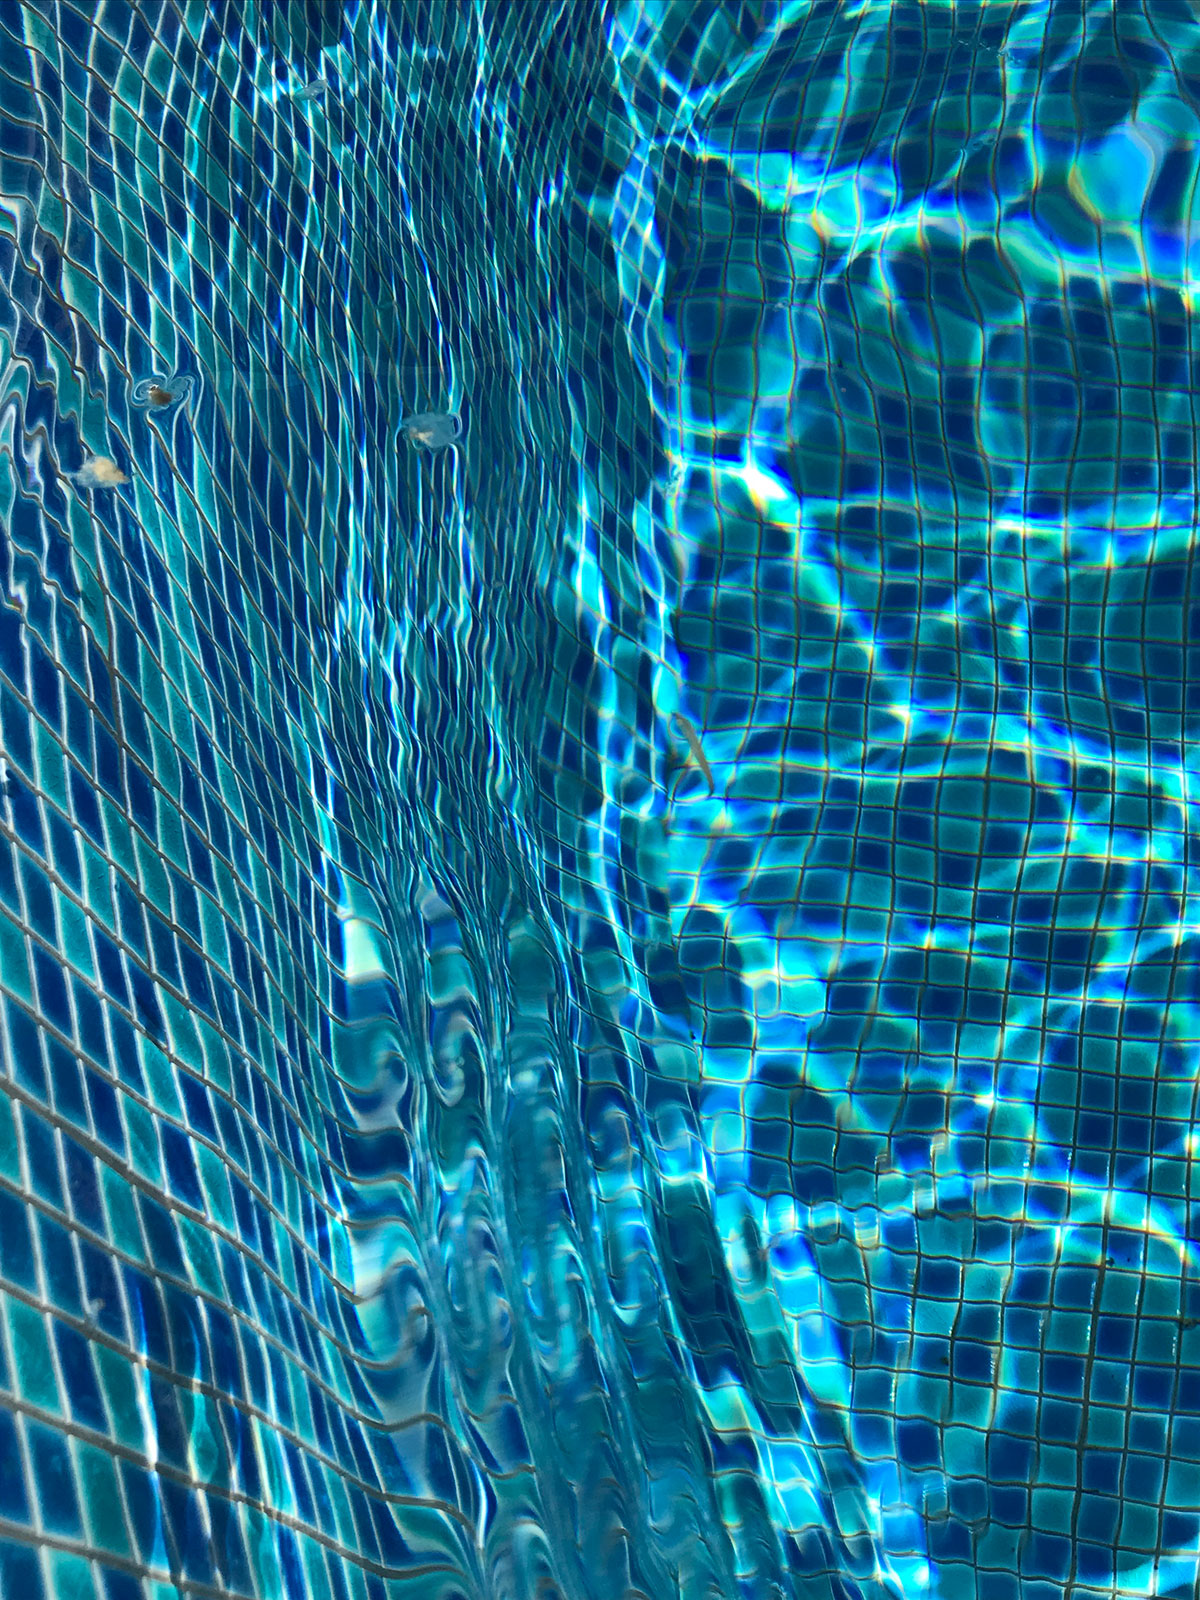 Circular plunge pool above ground pool